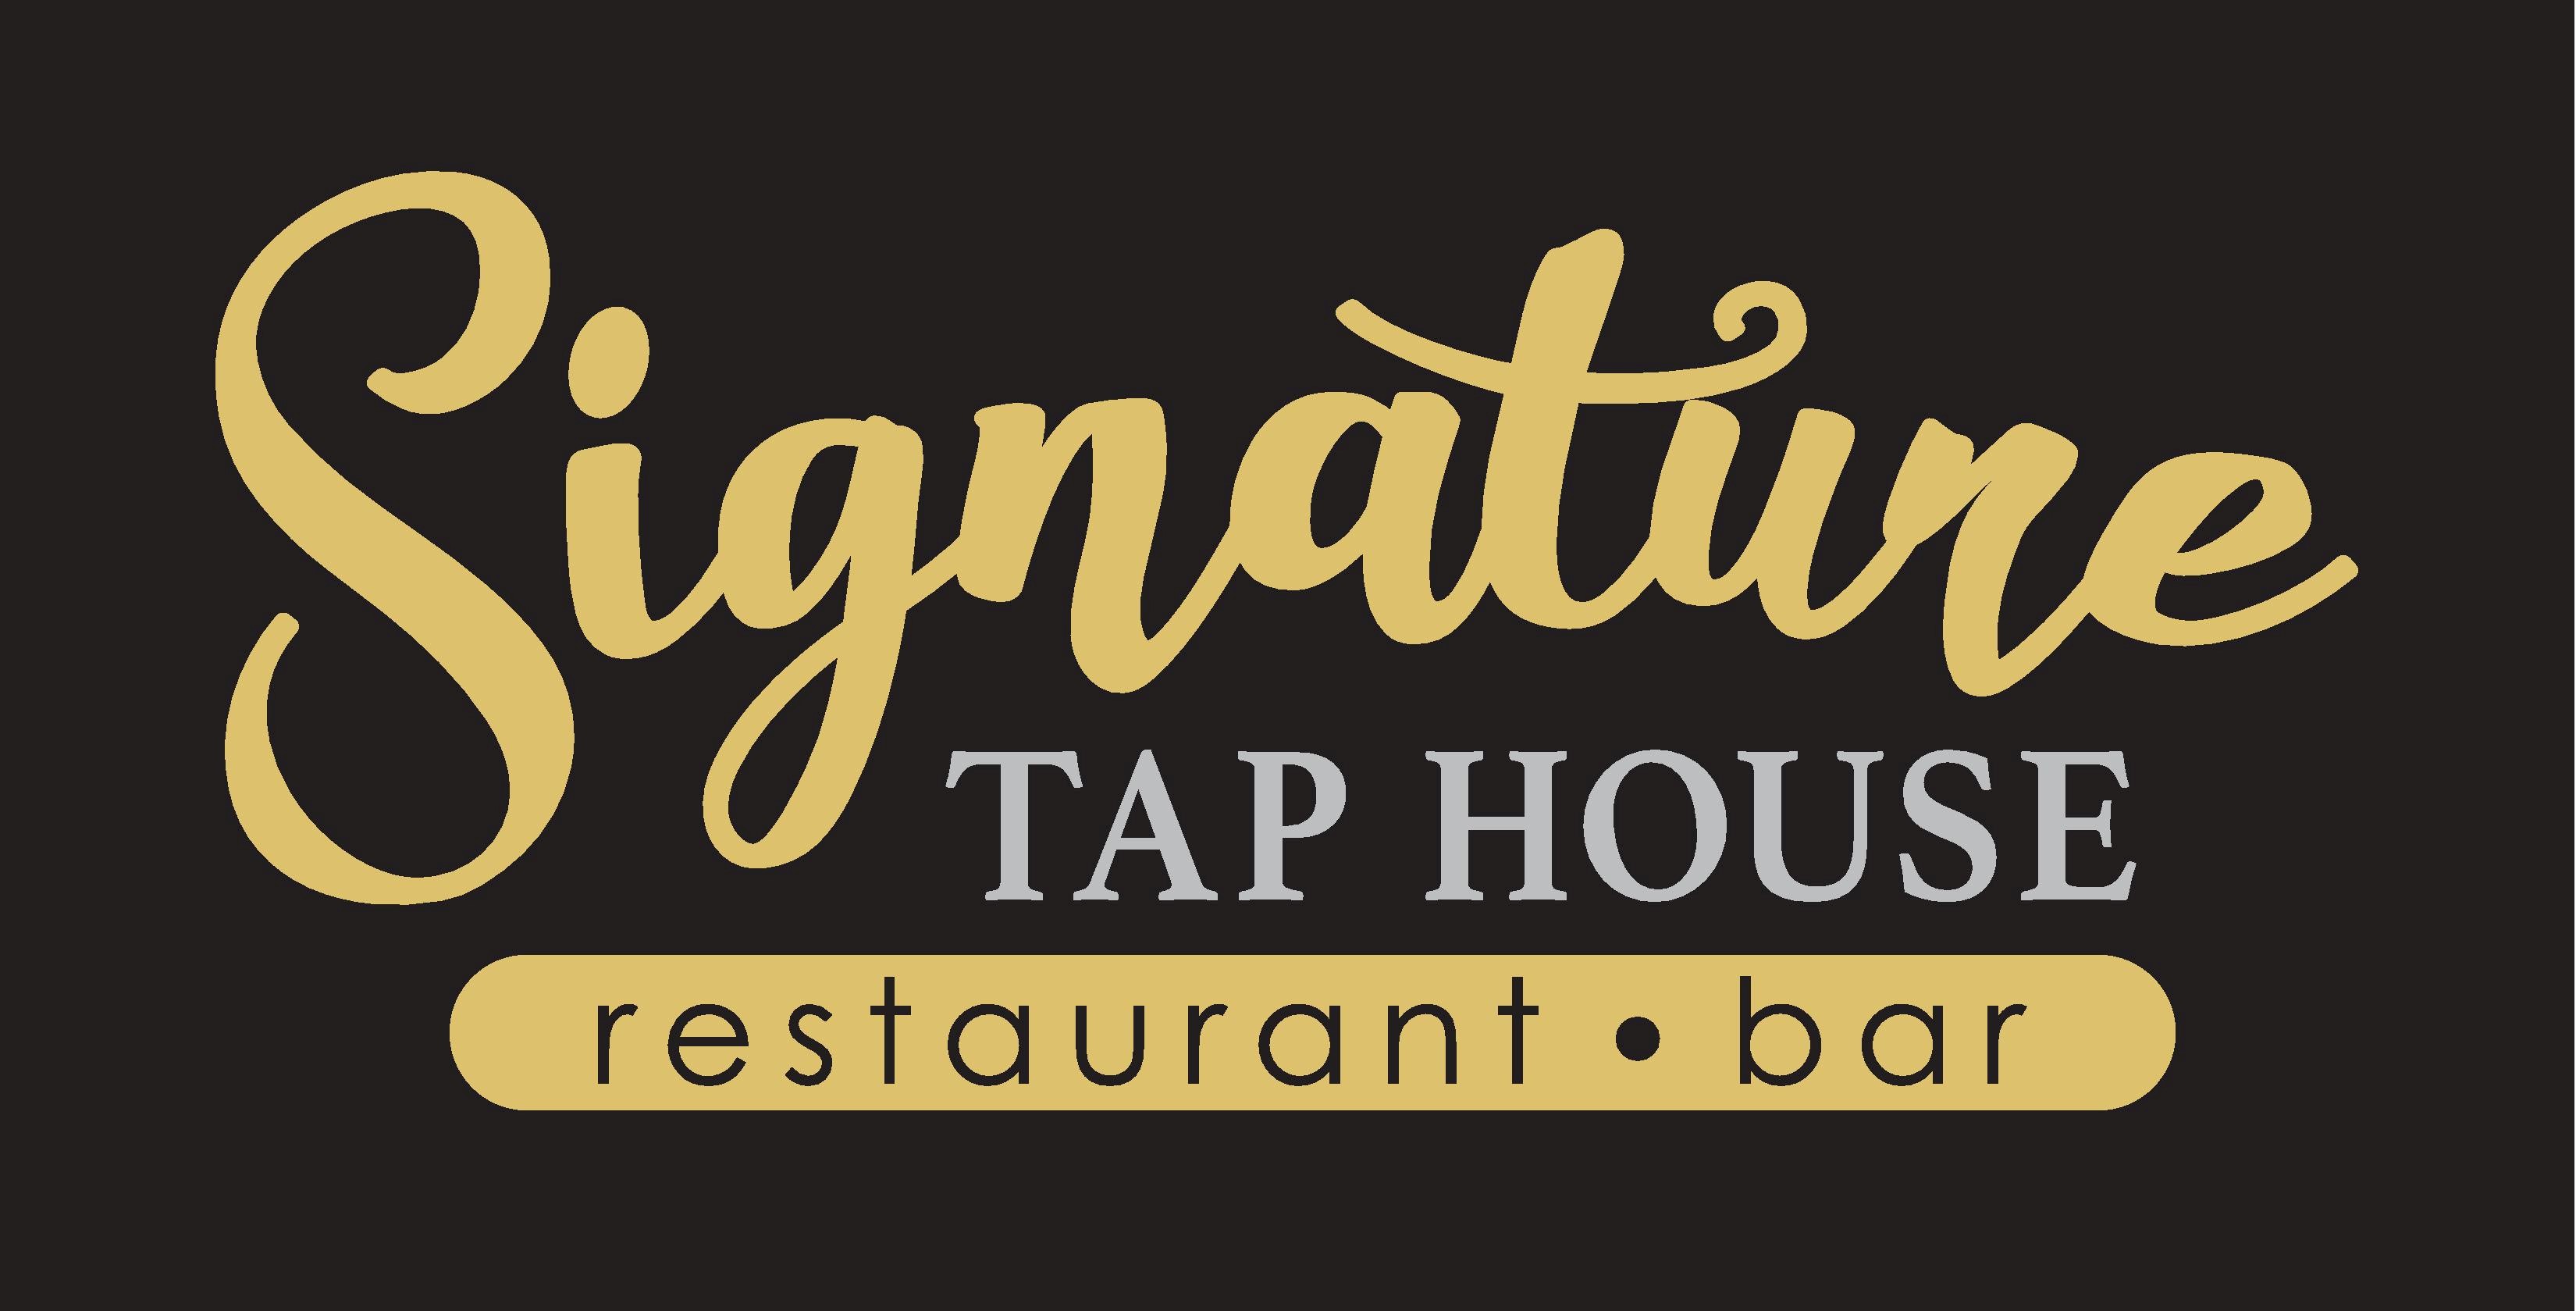 Signature Tap House Logo